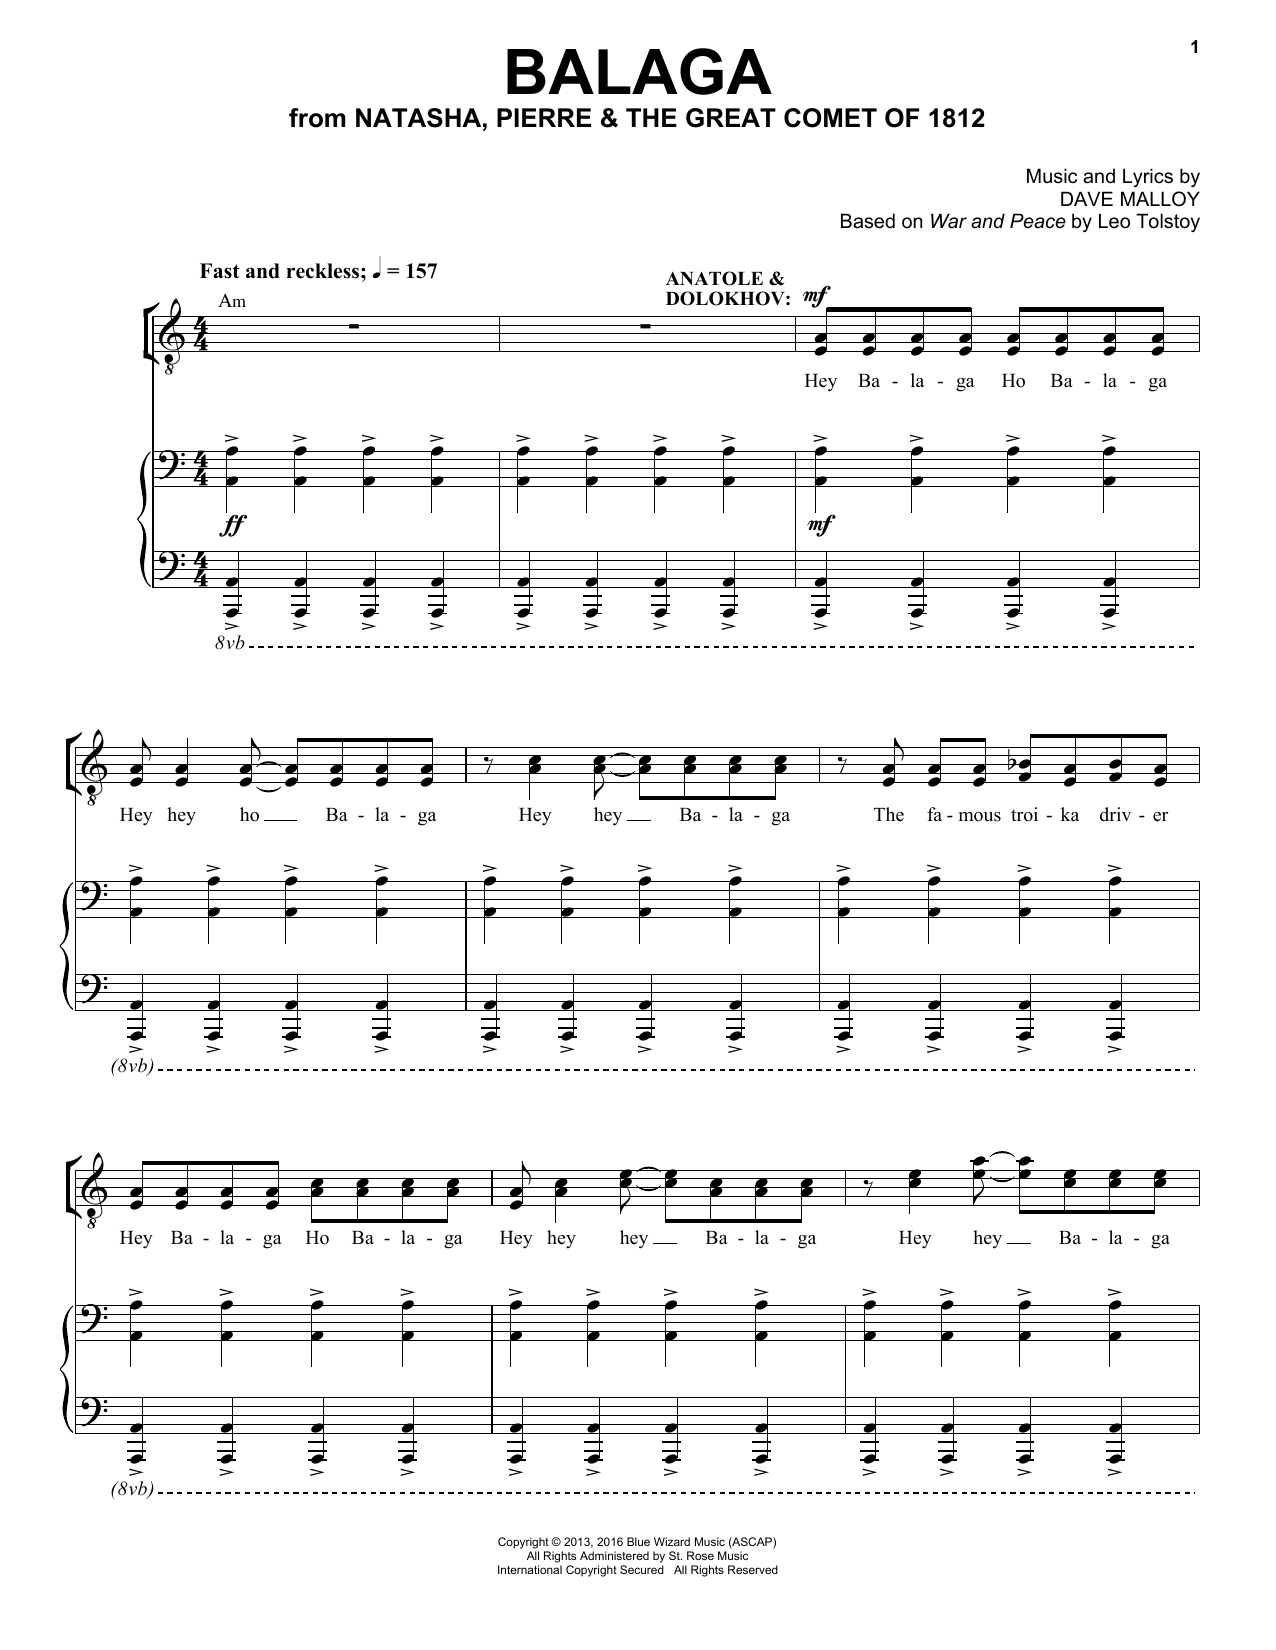 Josh Groban Balaga Sheet Music Notes & Chords for Piano & Vocal - Download or Print PDF